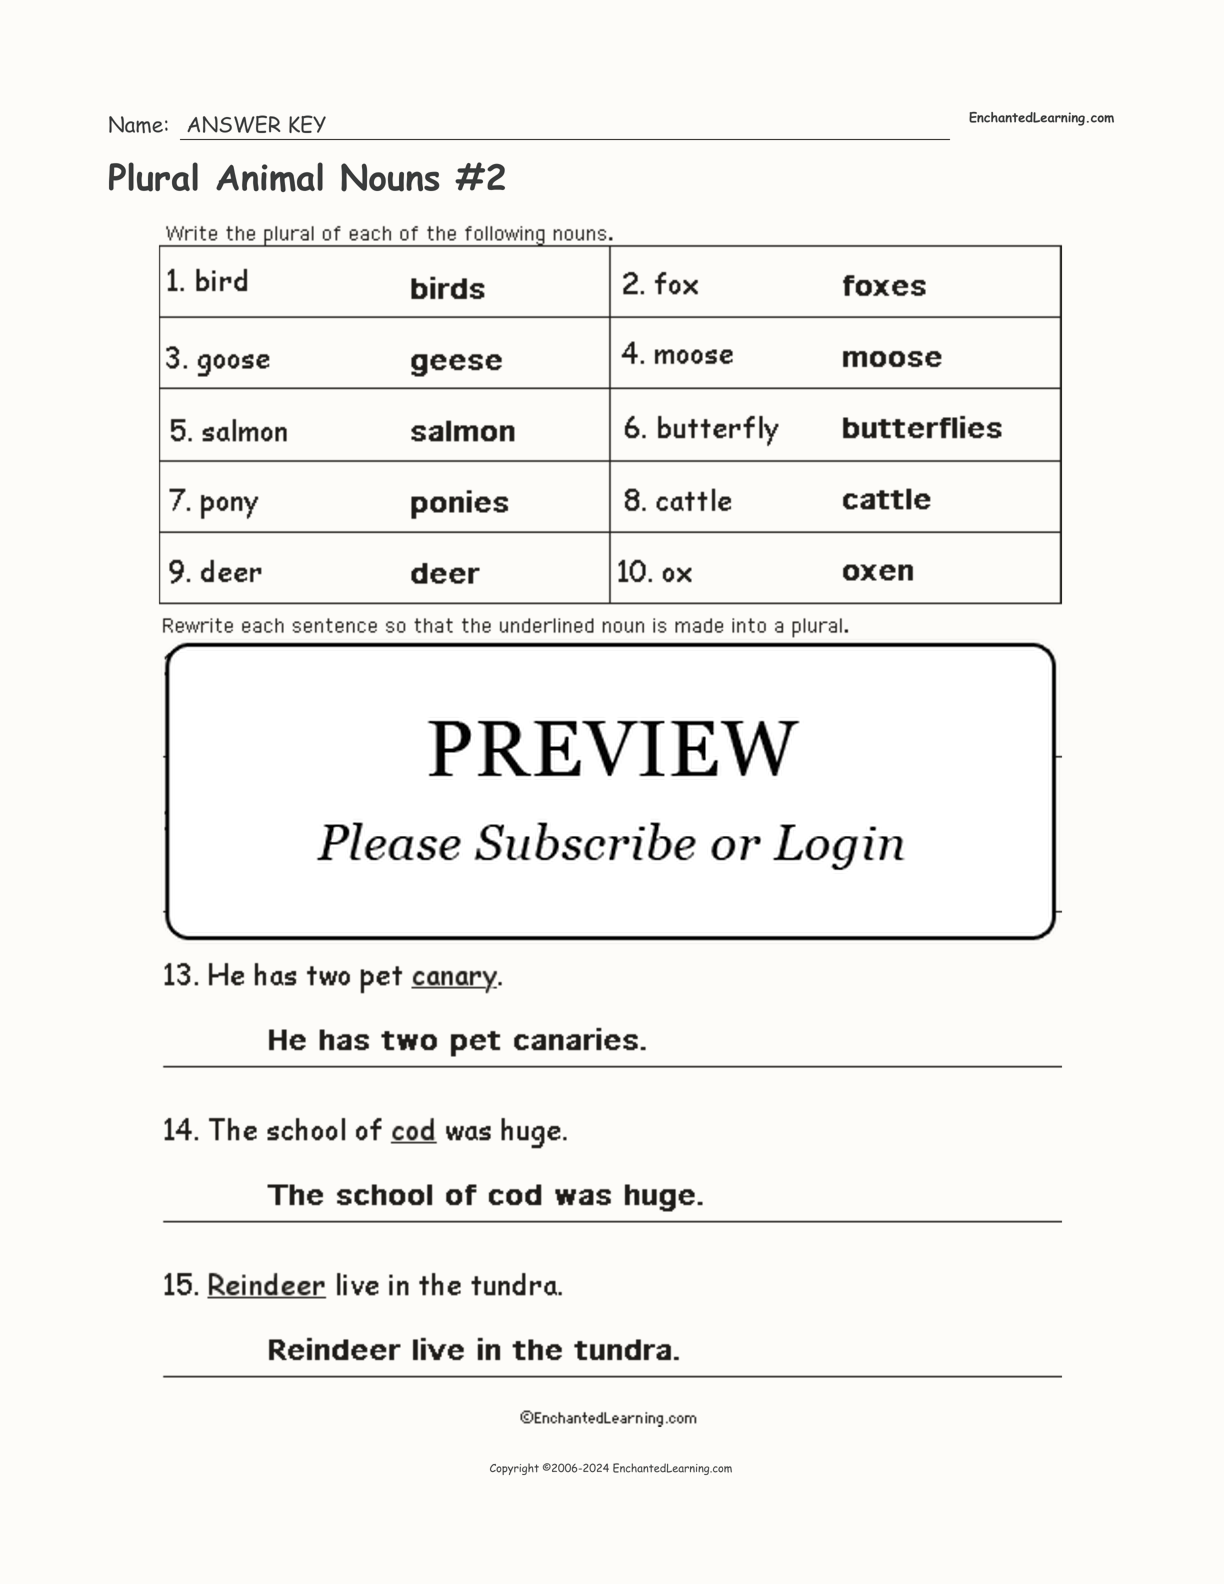 Plural Animal Nouns #2 interactive worksheet page 2